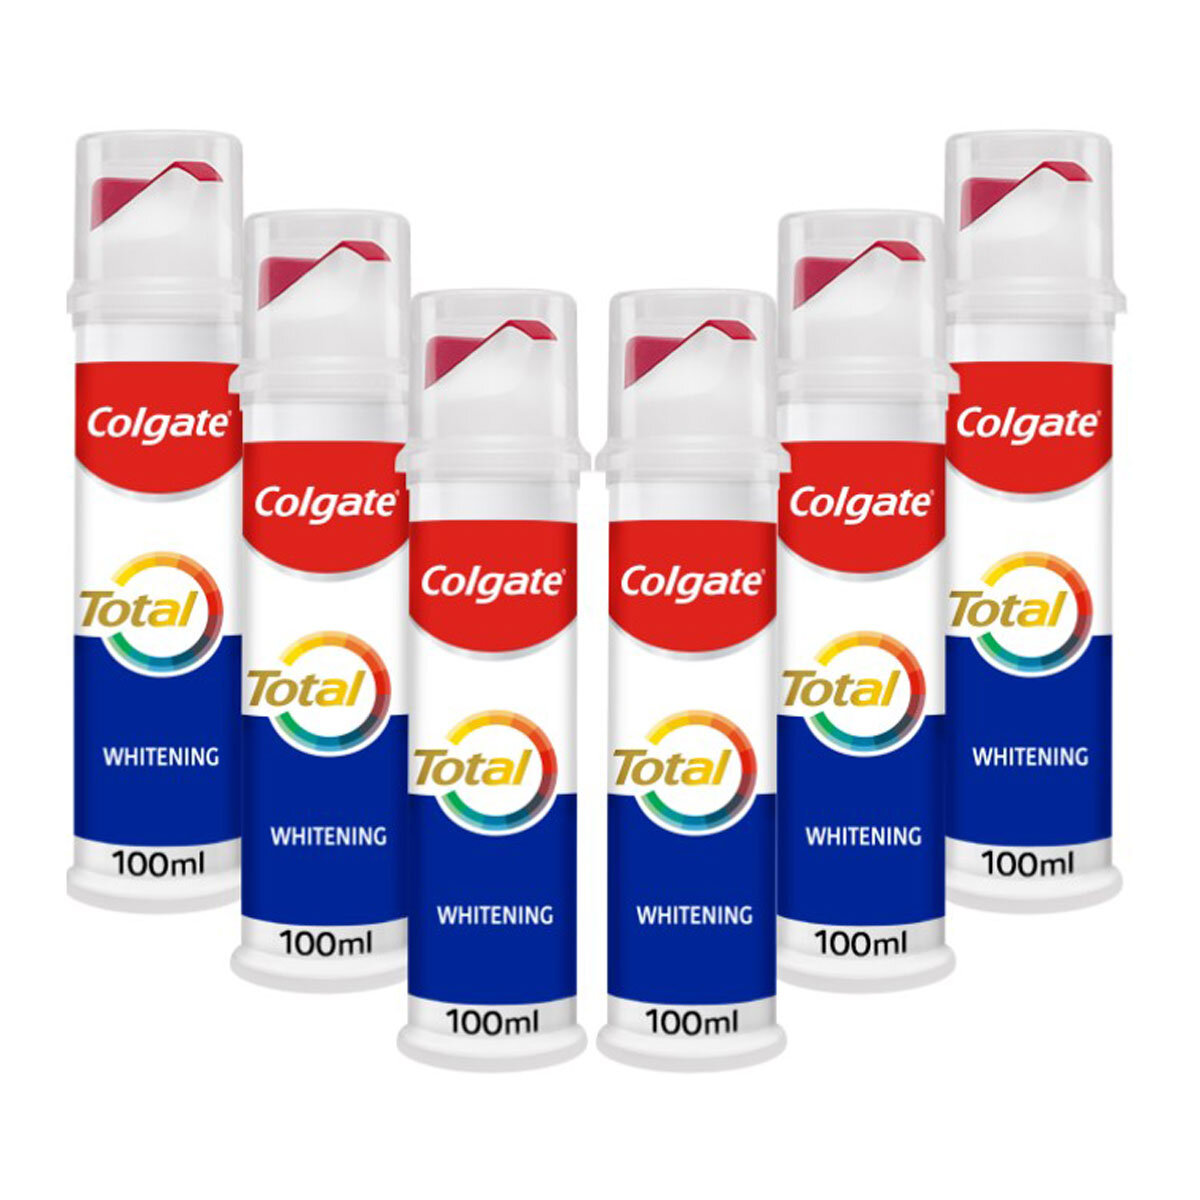 Colgate Total Whitening Toothpaste, 6 x 100ml